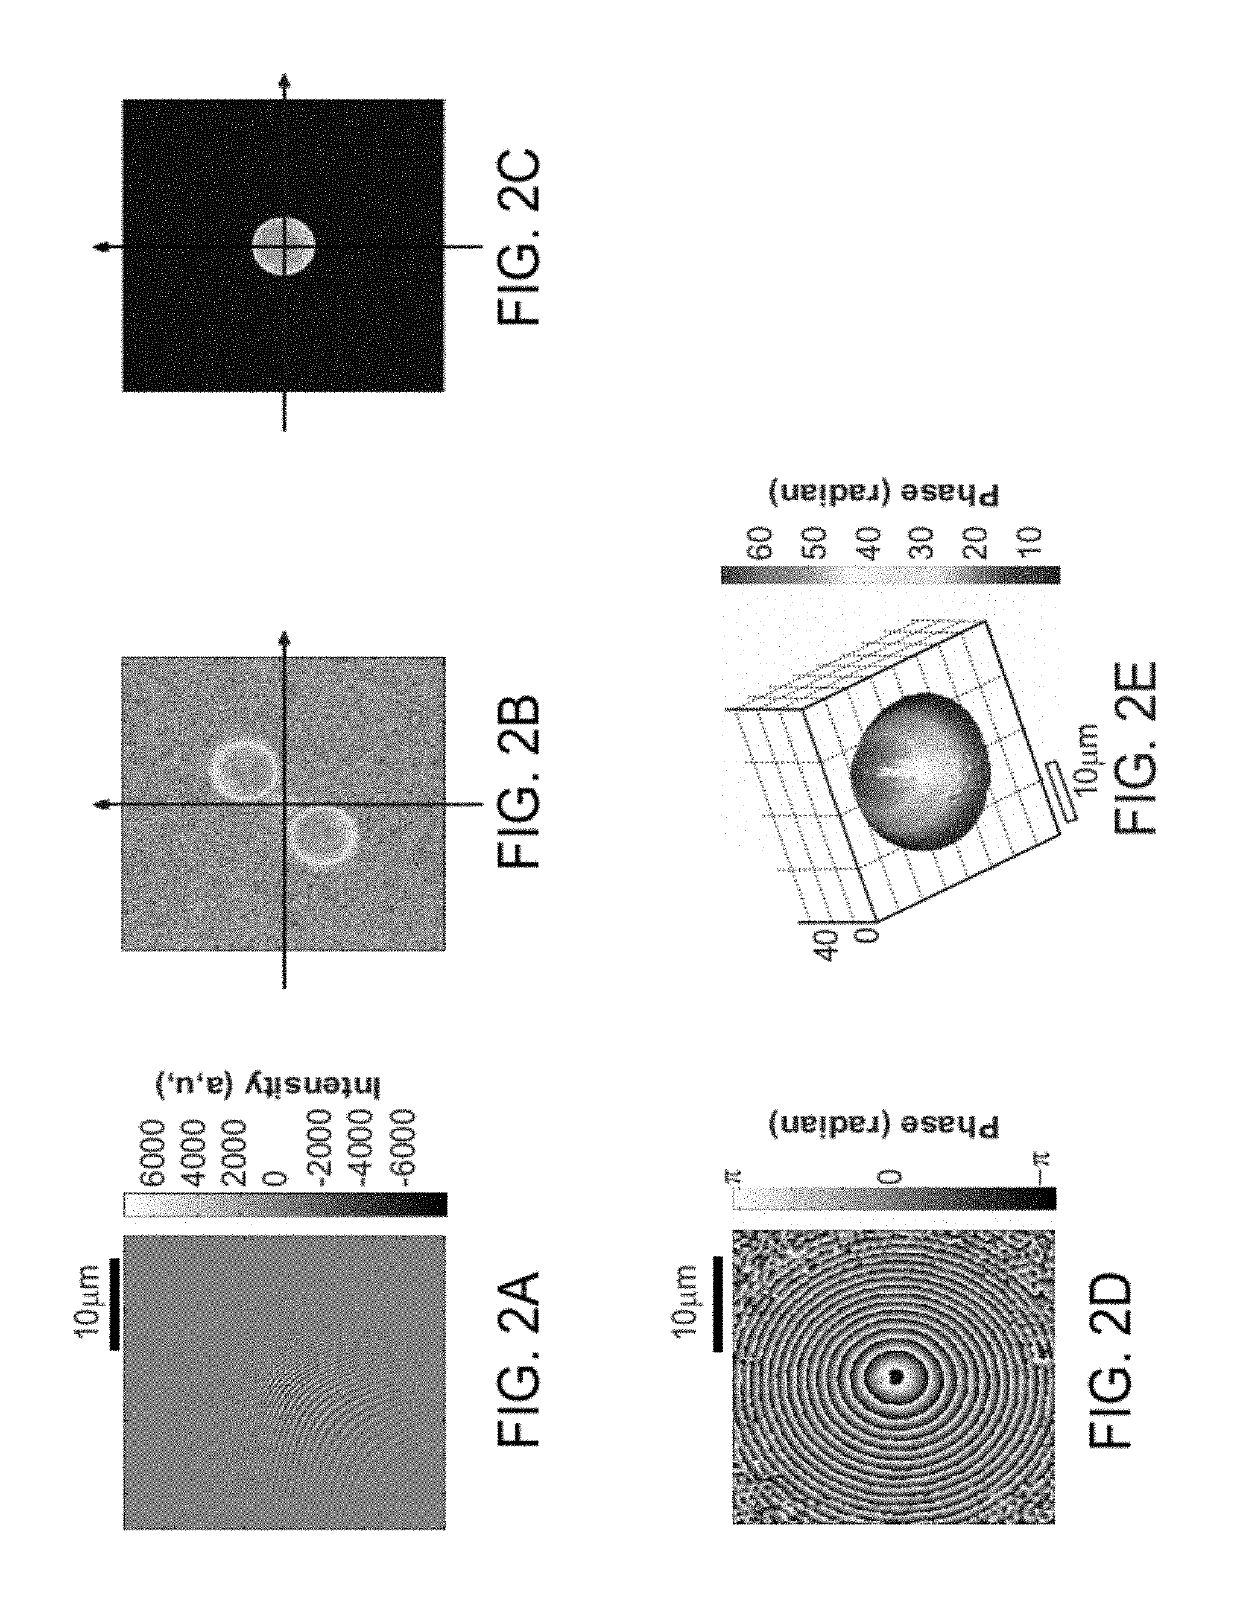 Single shot full-field reflection phase microscopy